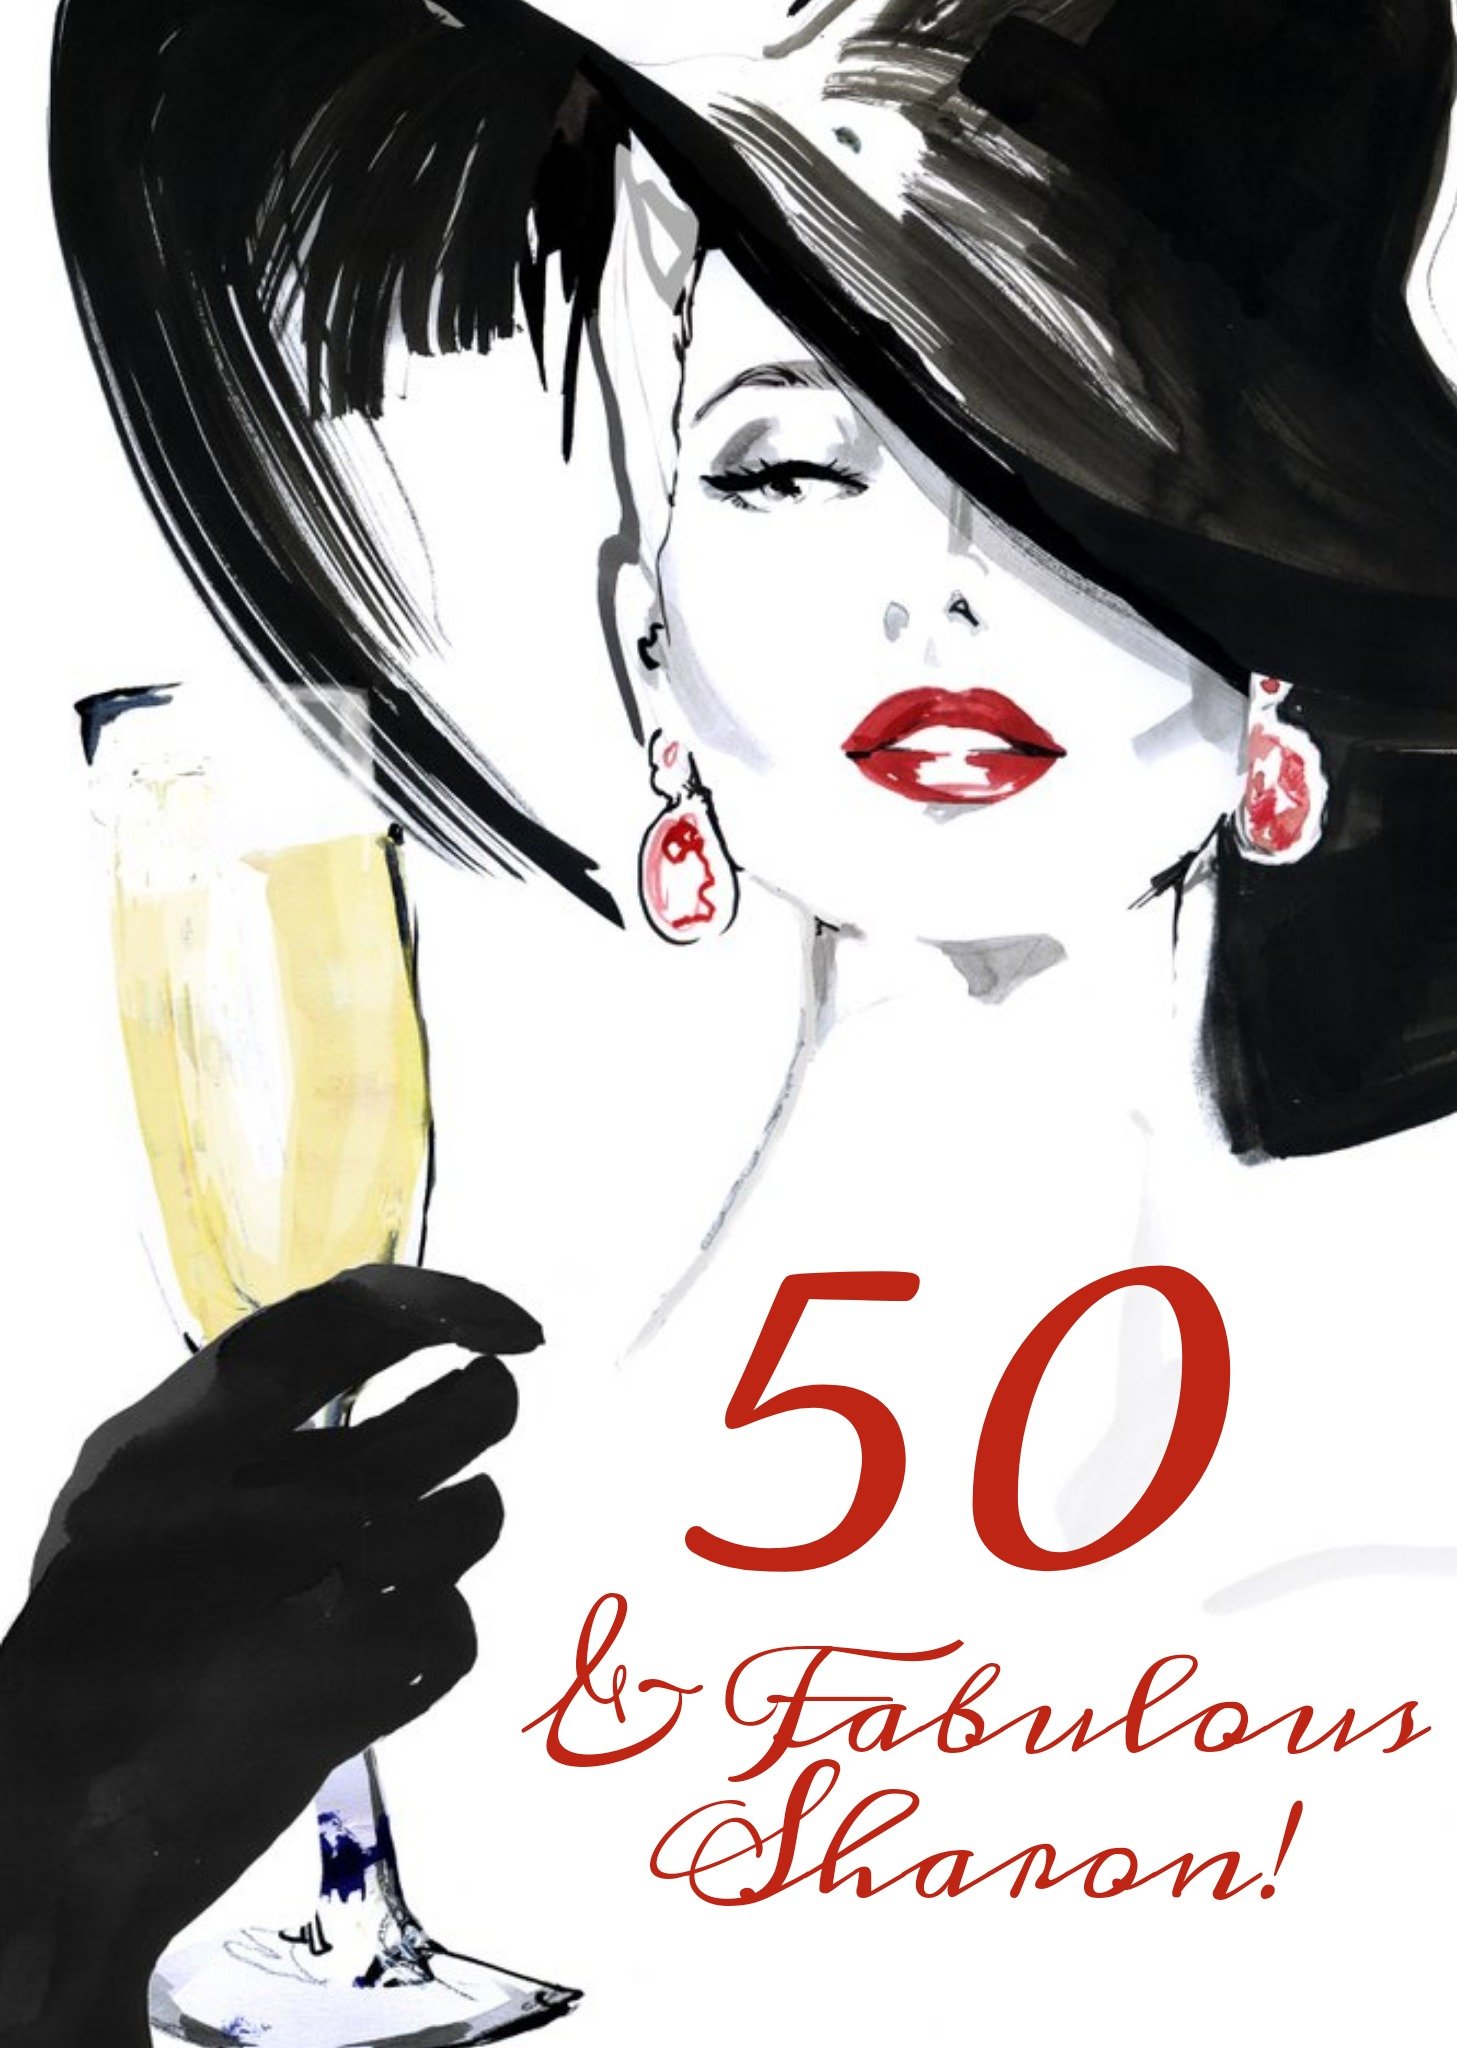 Moonpig Fashion Illustration Champagne Prosecco Birthday Card 50 & Fabulous, Large